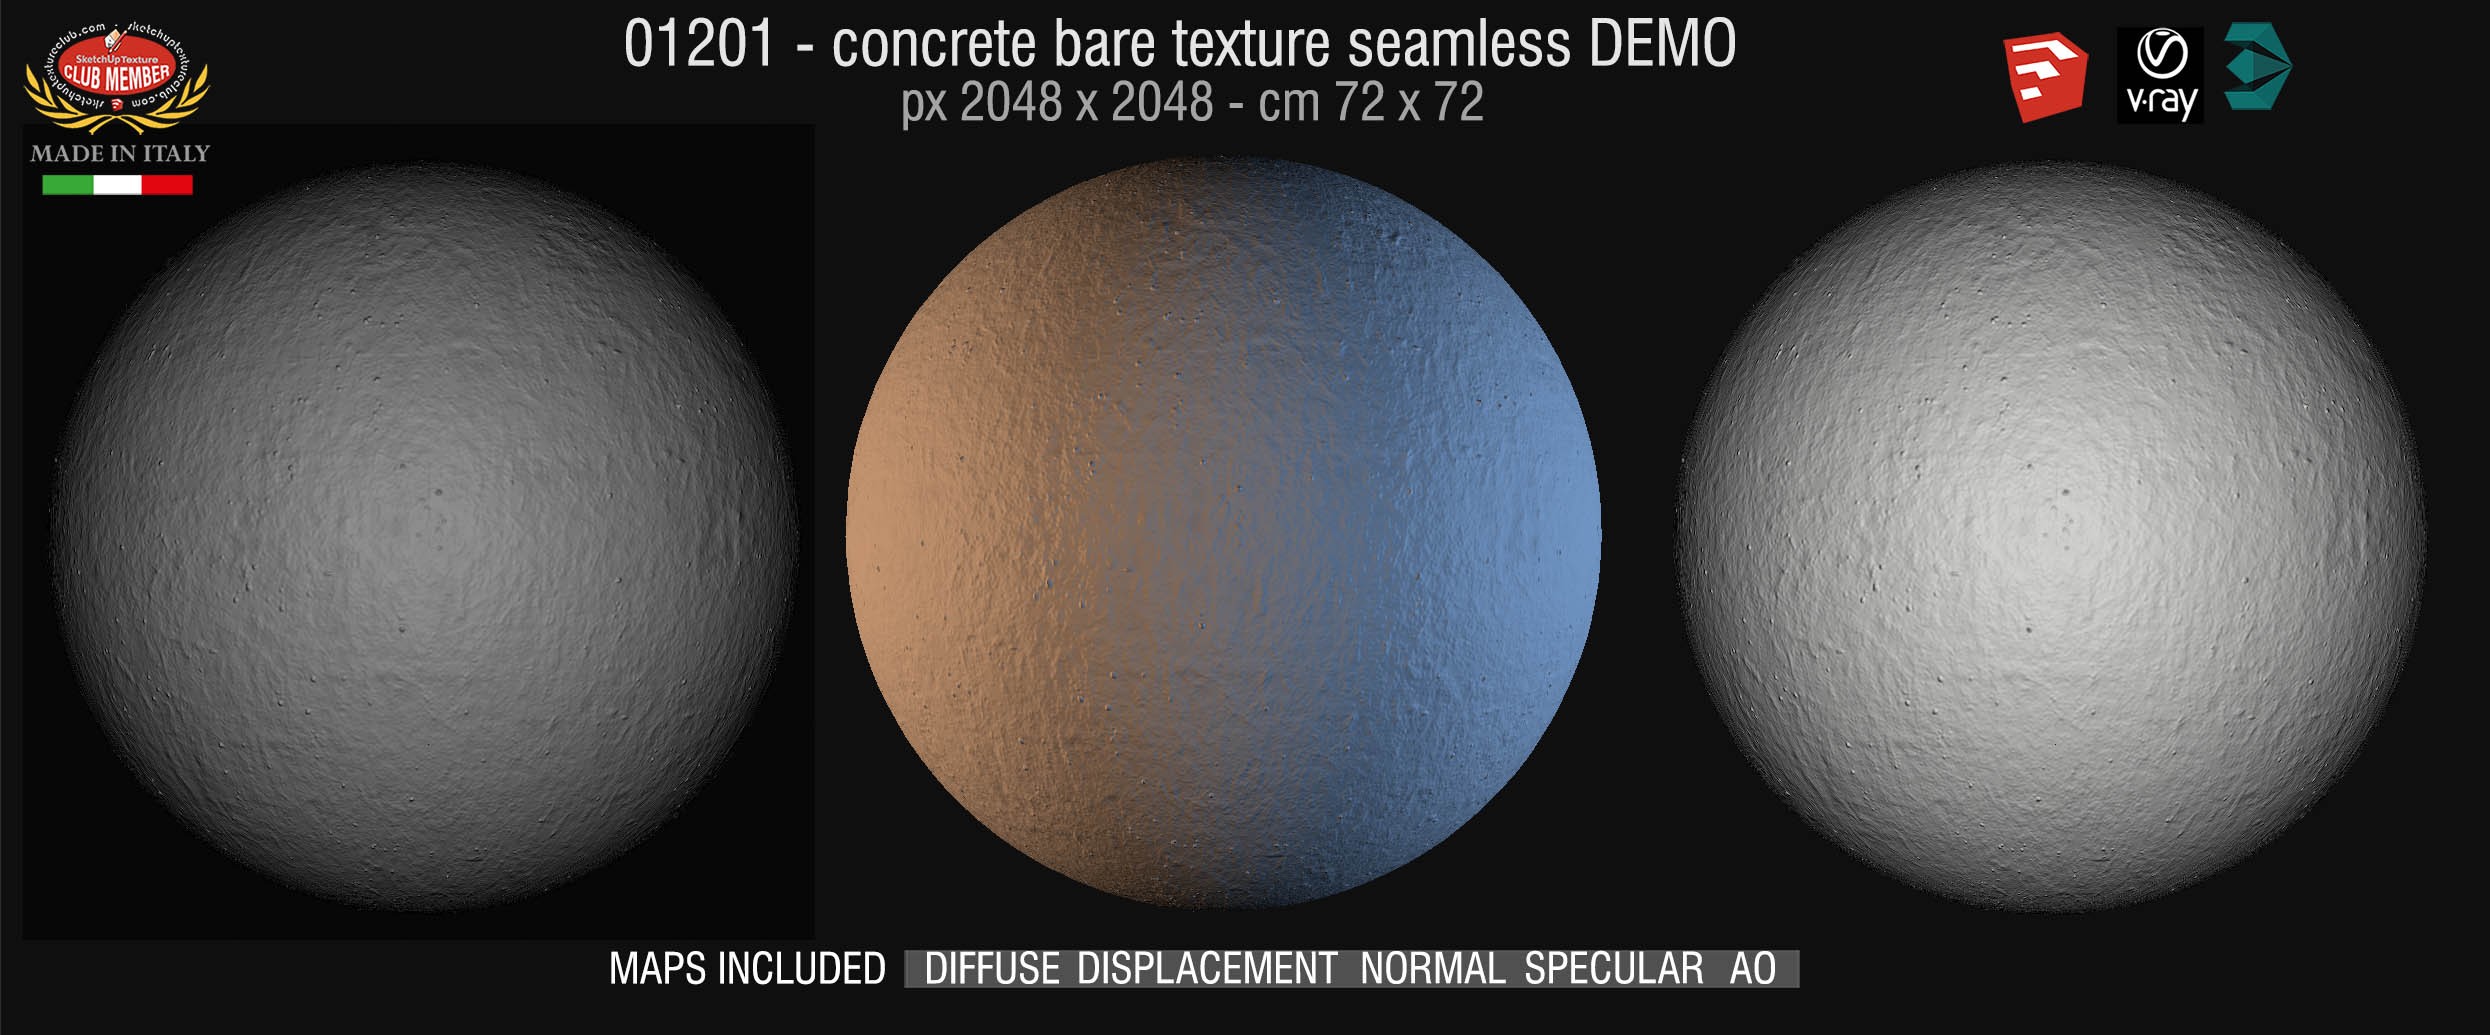 01201 HR Concrete bare clean texture + maps DEMO